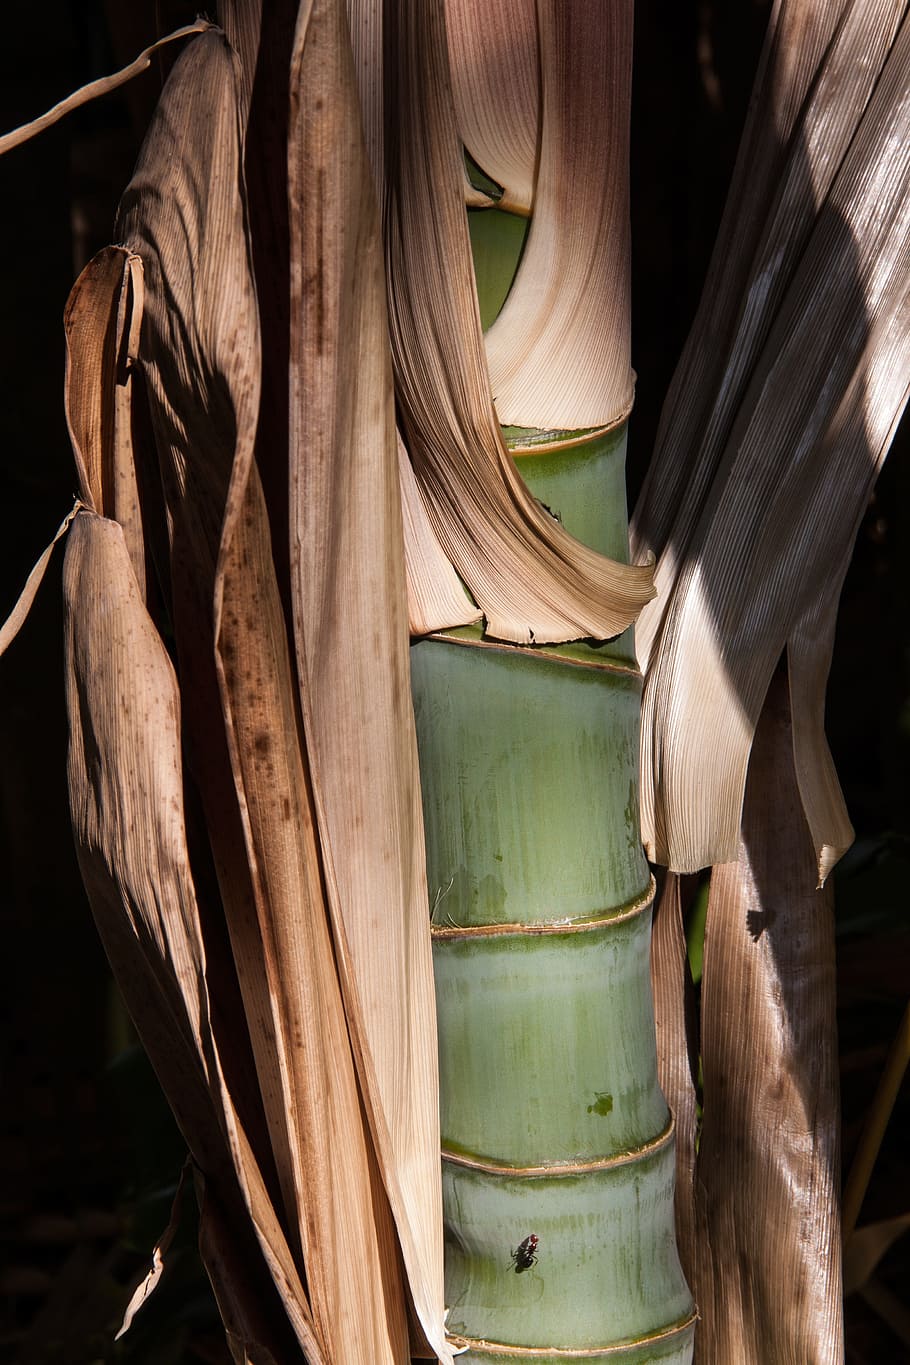 bambu hijau, bambu, rebung, rumput, tanaman bambu, grasartig, lignifikasi, lapang, mungil, mahkota daun